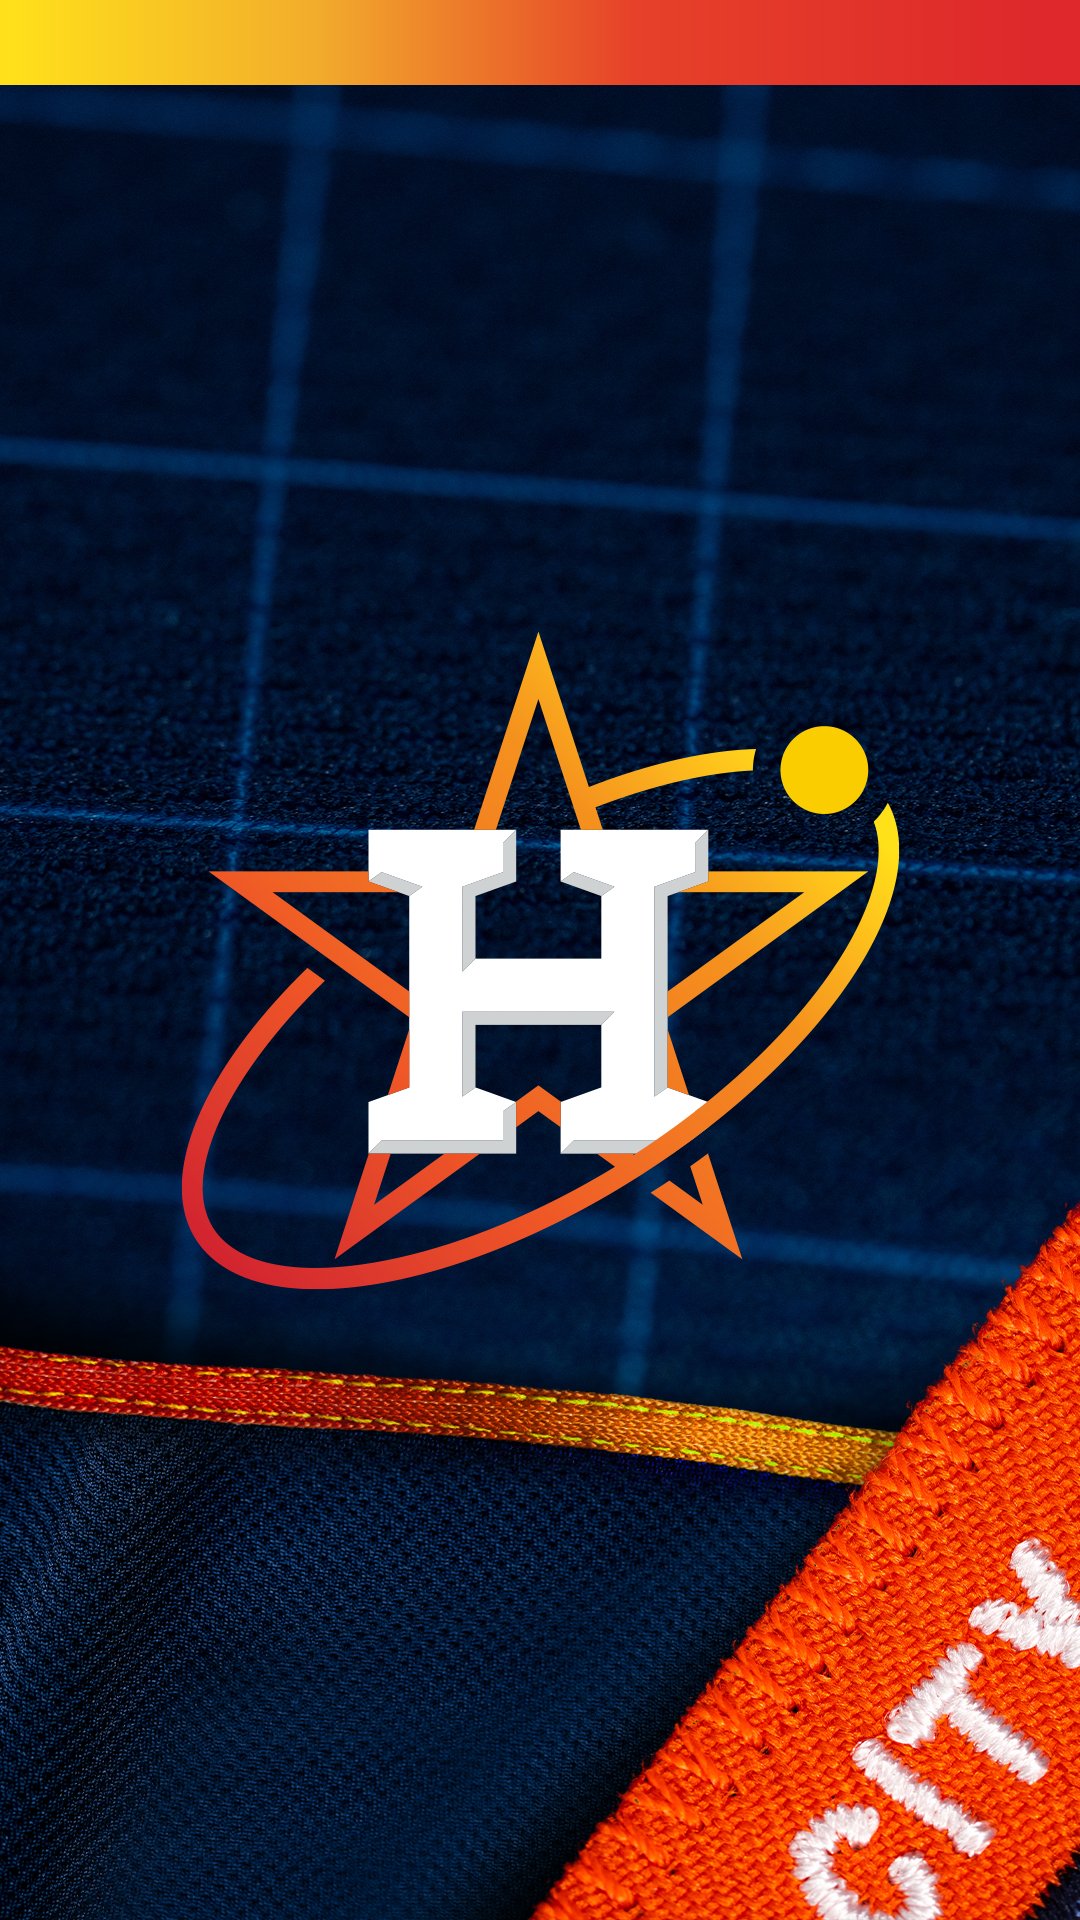 Houston Astros on X: Get your lock screen ready for tonight. #SpaceCity  #WallpaperWednesday x @ImpactMyBiz  / X